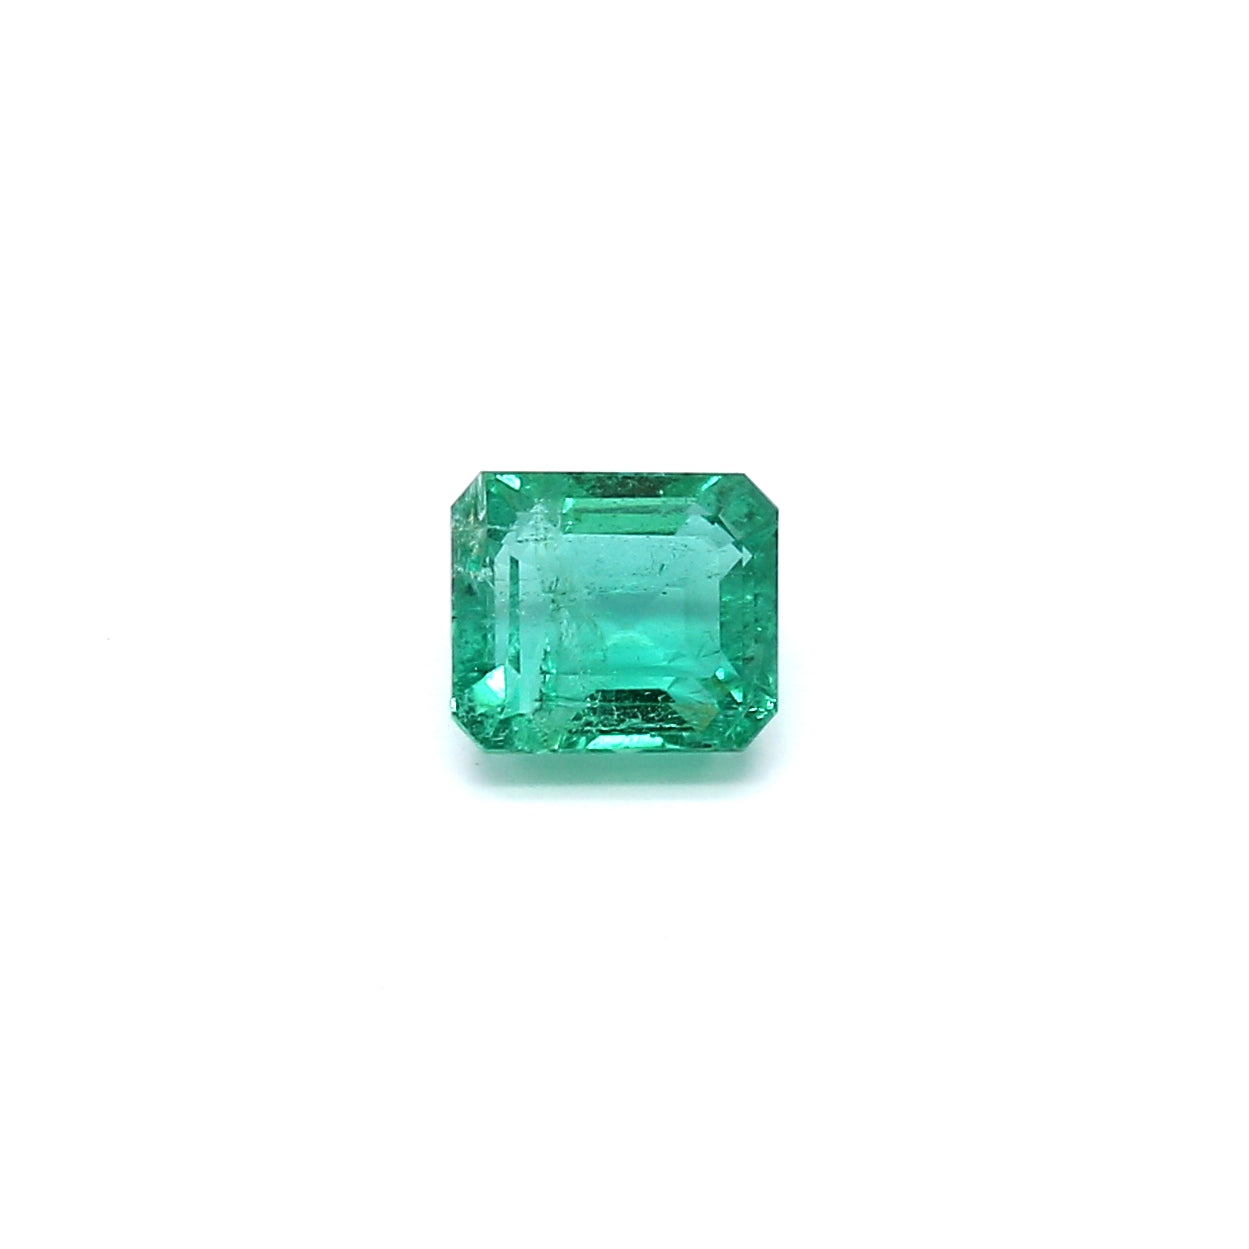 0.81ct Octagon Emerald, Moderate Oil, Zambia - 5.73 x 4.94 x 3.43mm